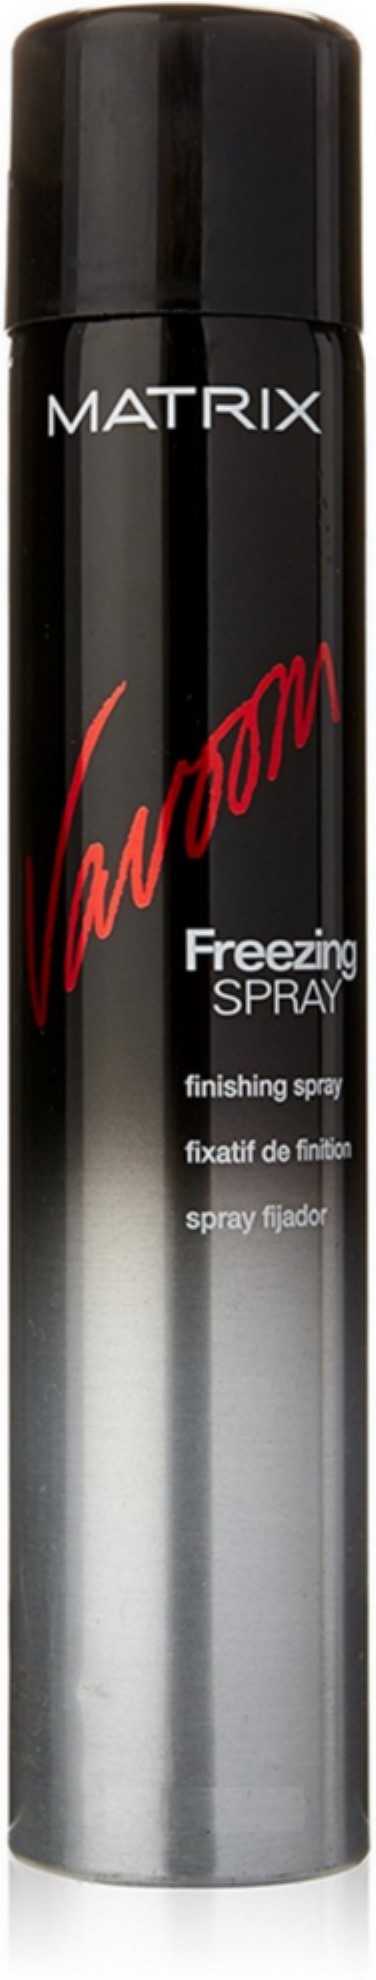 Vavoom Freezing Spray by Matrix for Unisex - 11 oz Hairspray - image 1 of 6